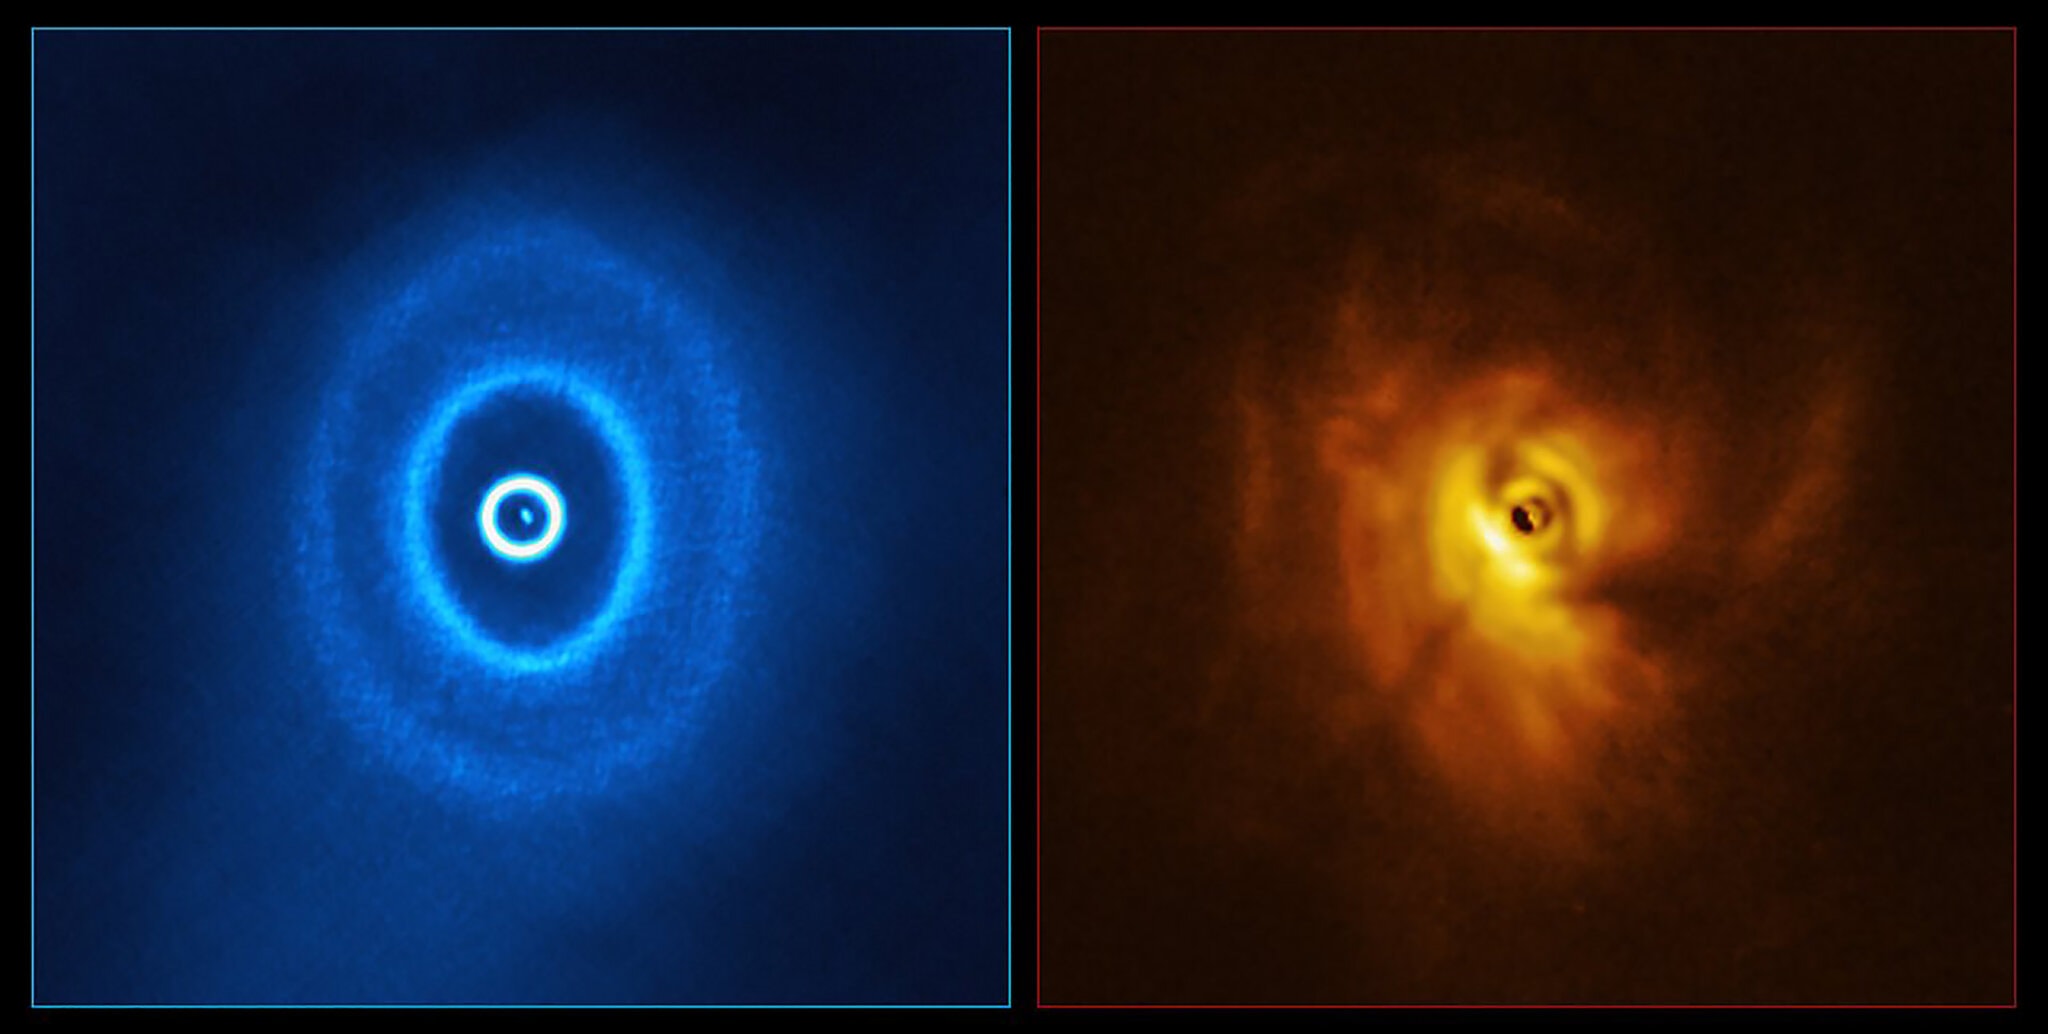 Triple Star System GW Ori Has Possible Planet